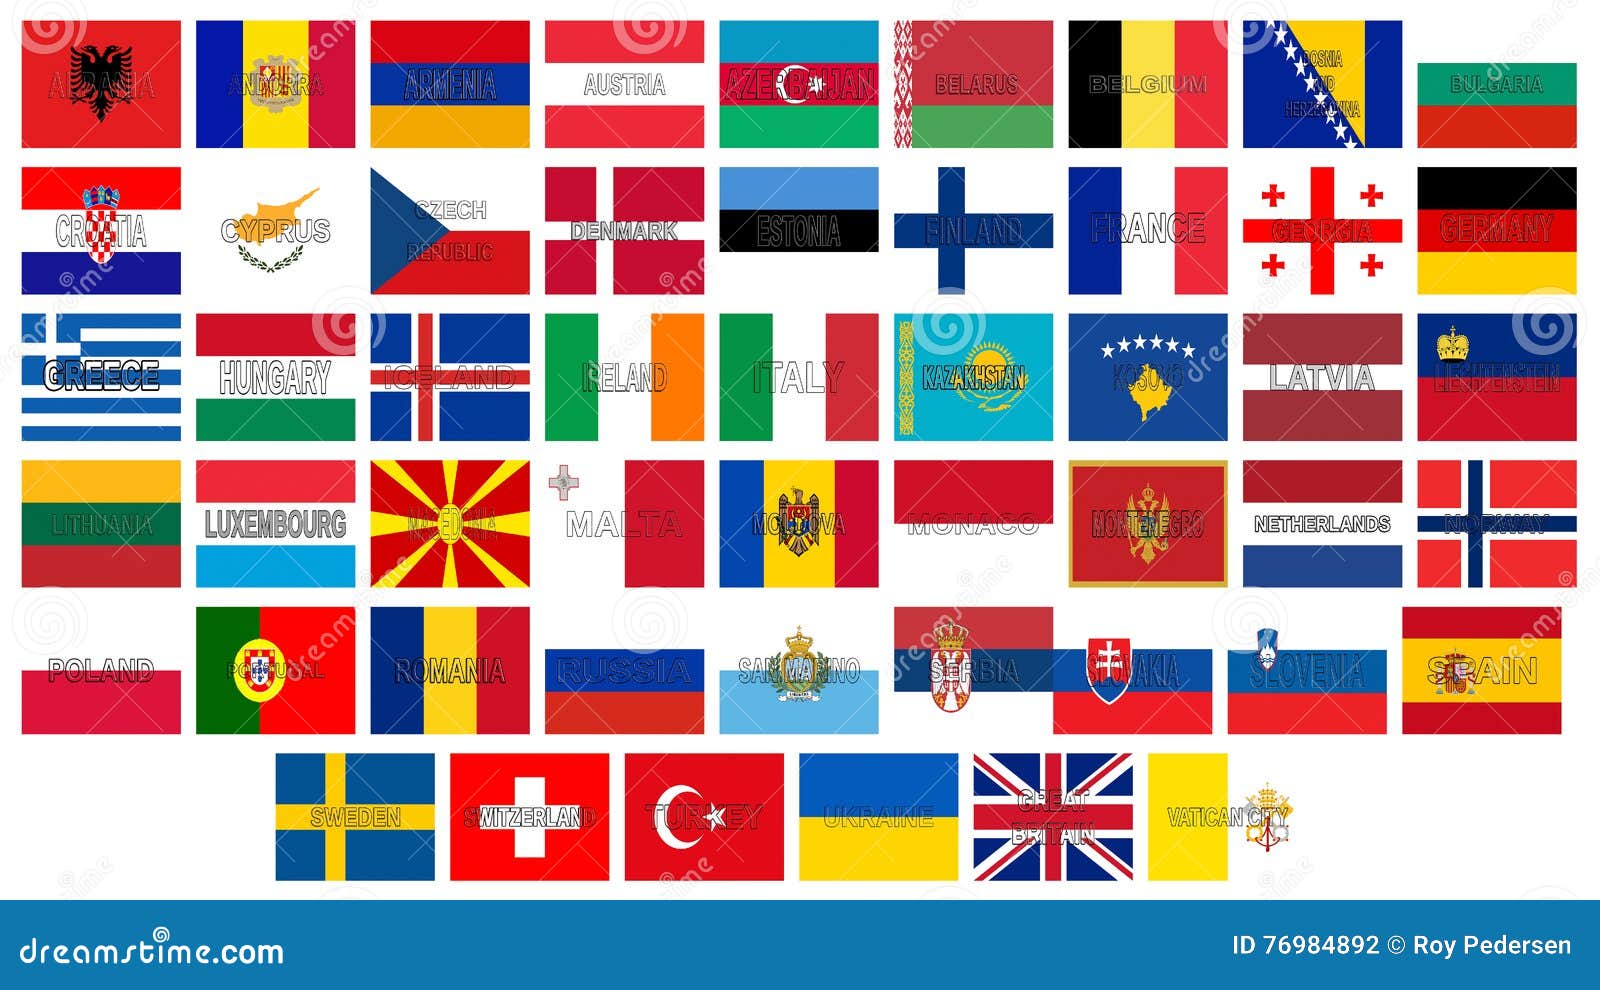 Флаги европы фото. Флаги Европы с названиями. Флаги Европы фото с названием. Флаг Европы картинки. Флаги стран Европы с названиями на русском.